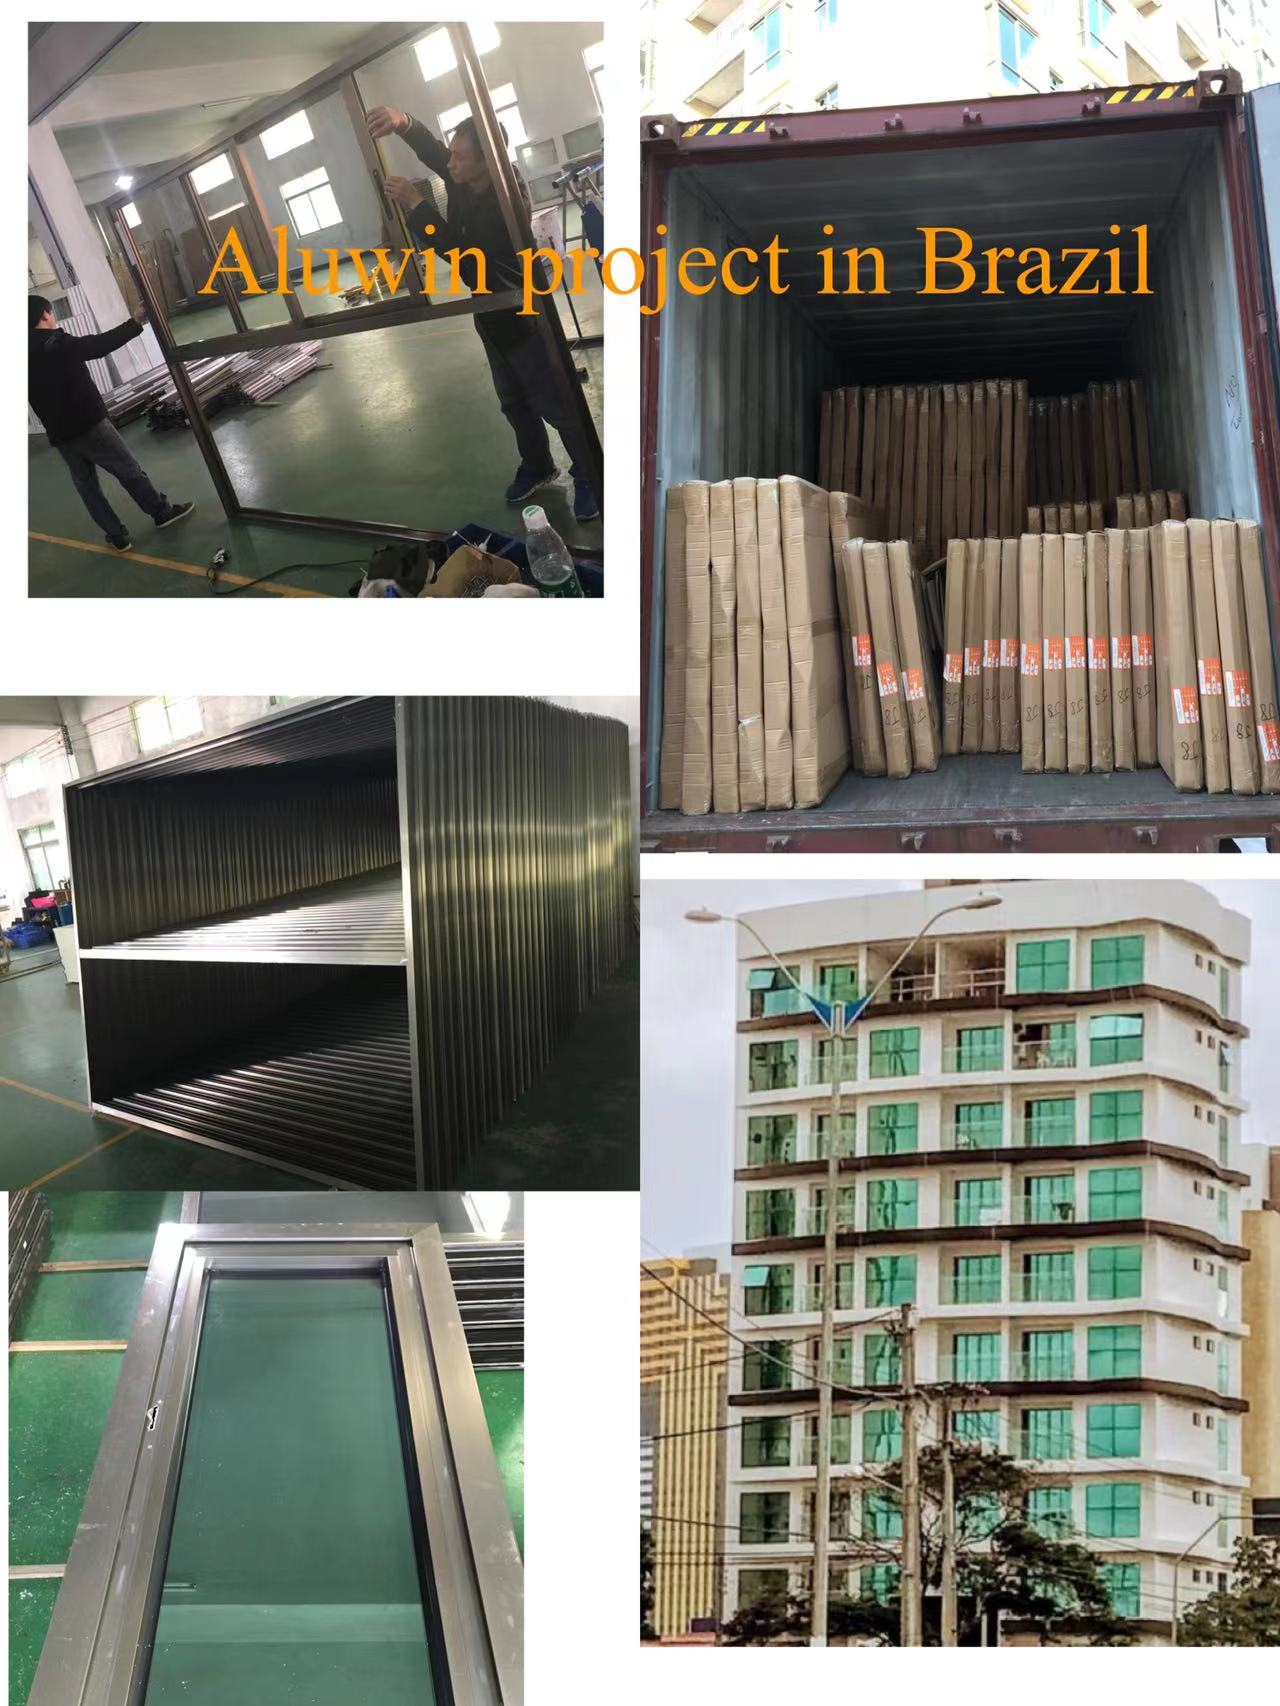 Brazil project in 2016